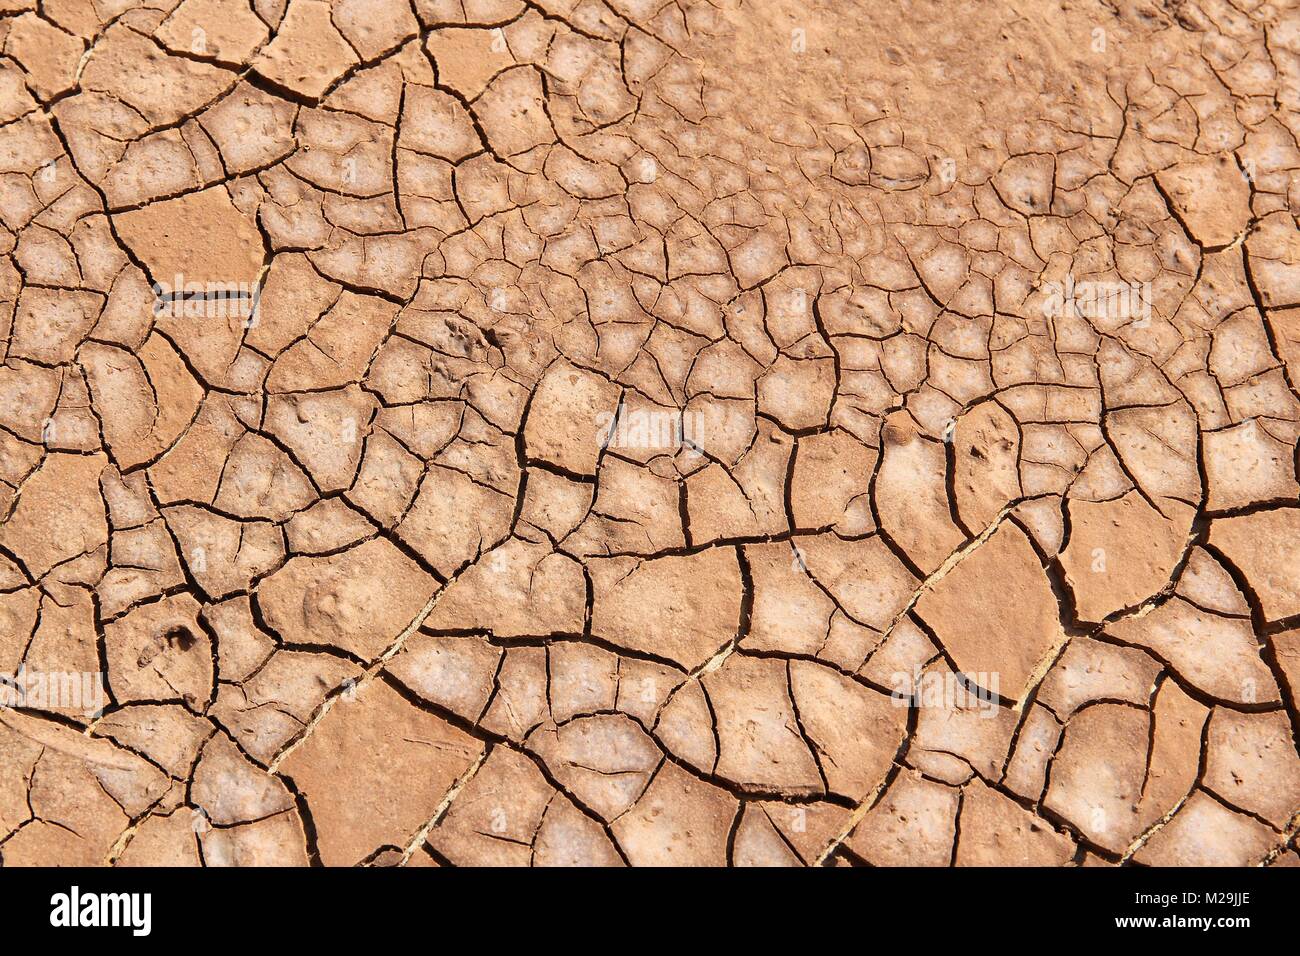 Dürre in Sudan, Afrika. Risse im trockenen Boden - globale Erwärmung. Stockfoto